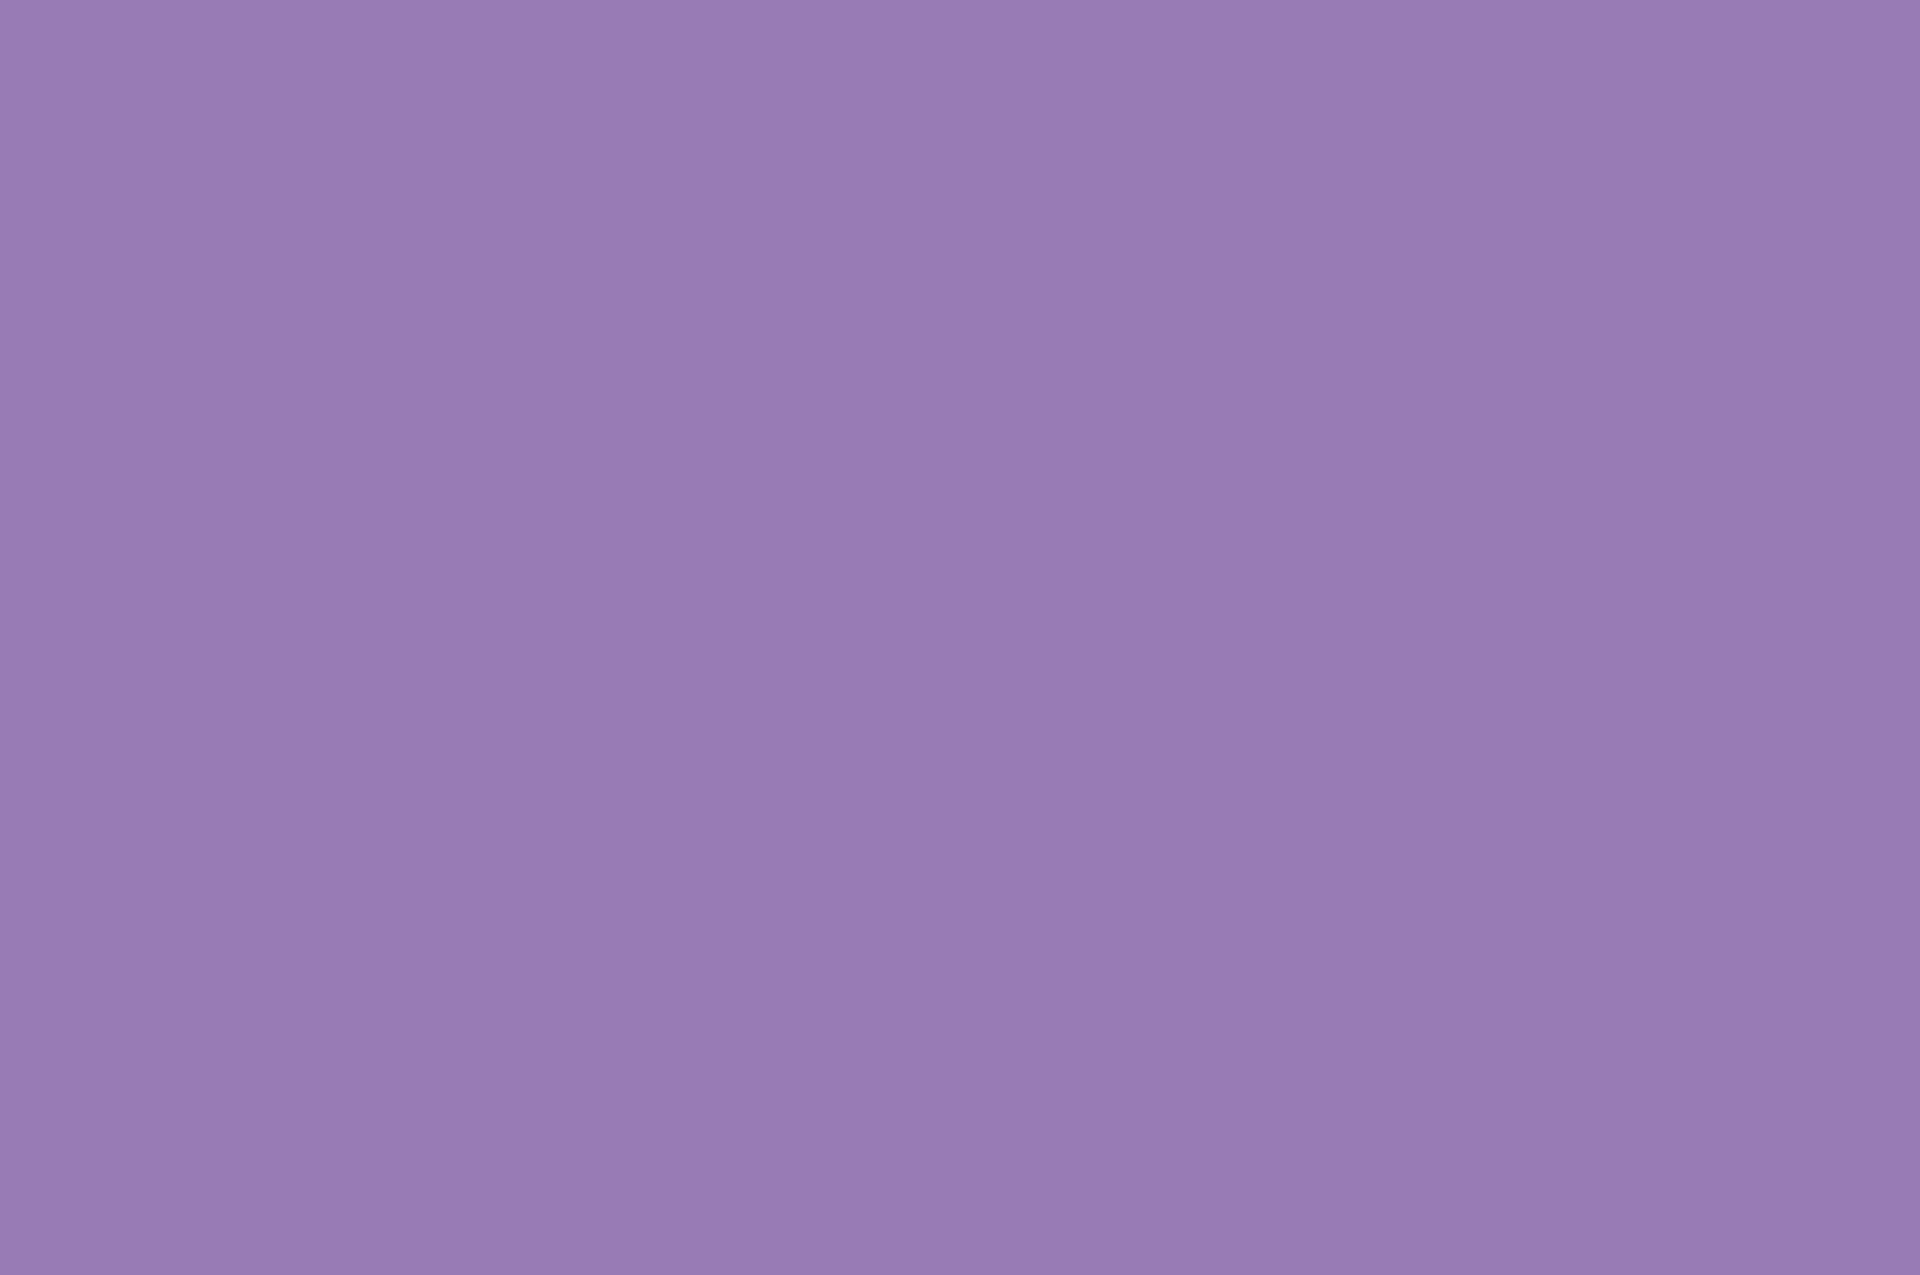 Free Plain Purple Wallpaper Downloads, [100+] Plain Purple Wallpapers for  FREE 